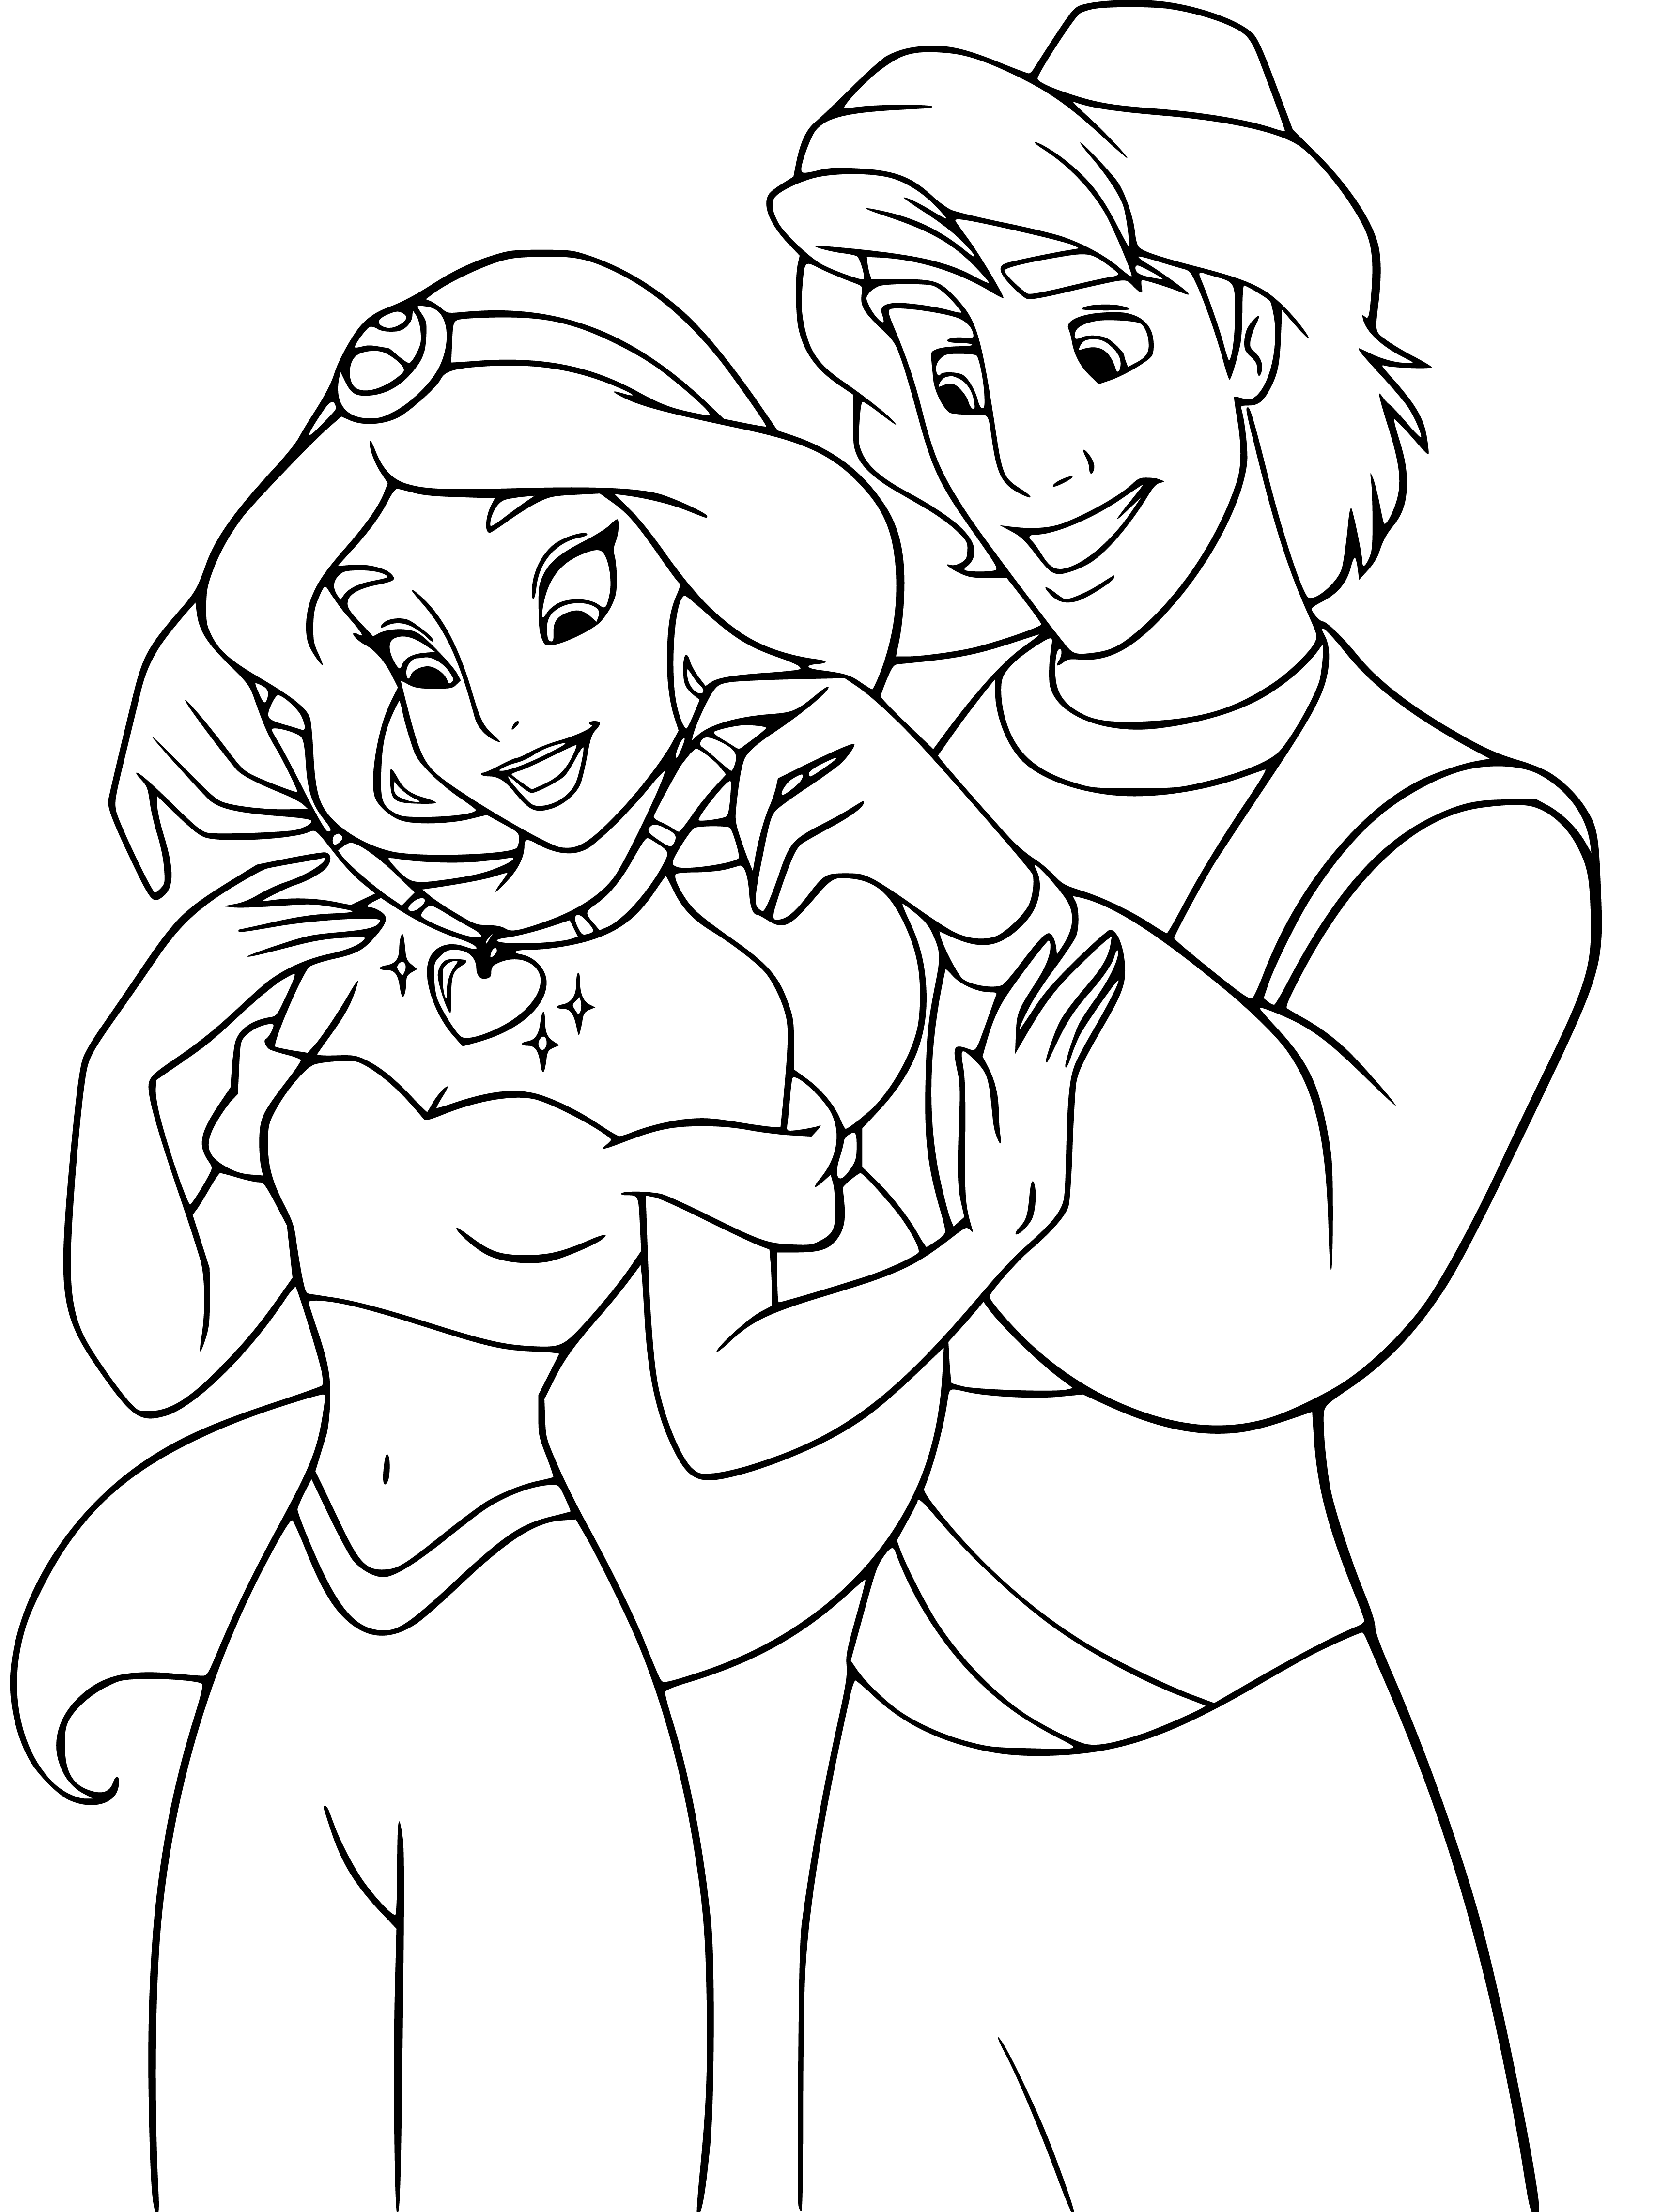 Princess Jasmine and Aladdin Coloring Page Printable for Kids, Free, Simple and Easy, as PDF